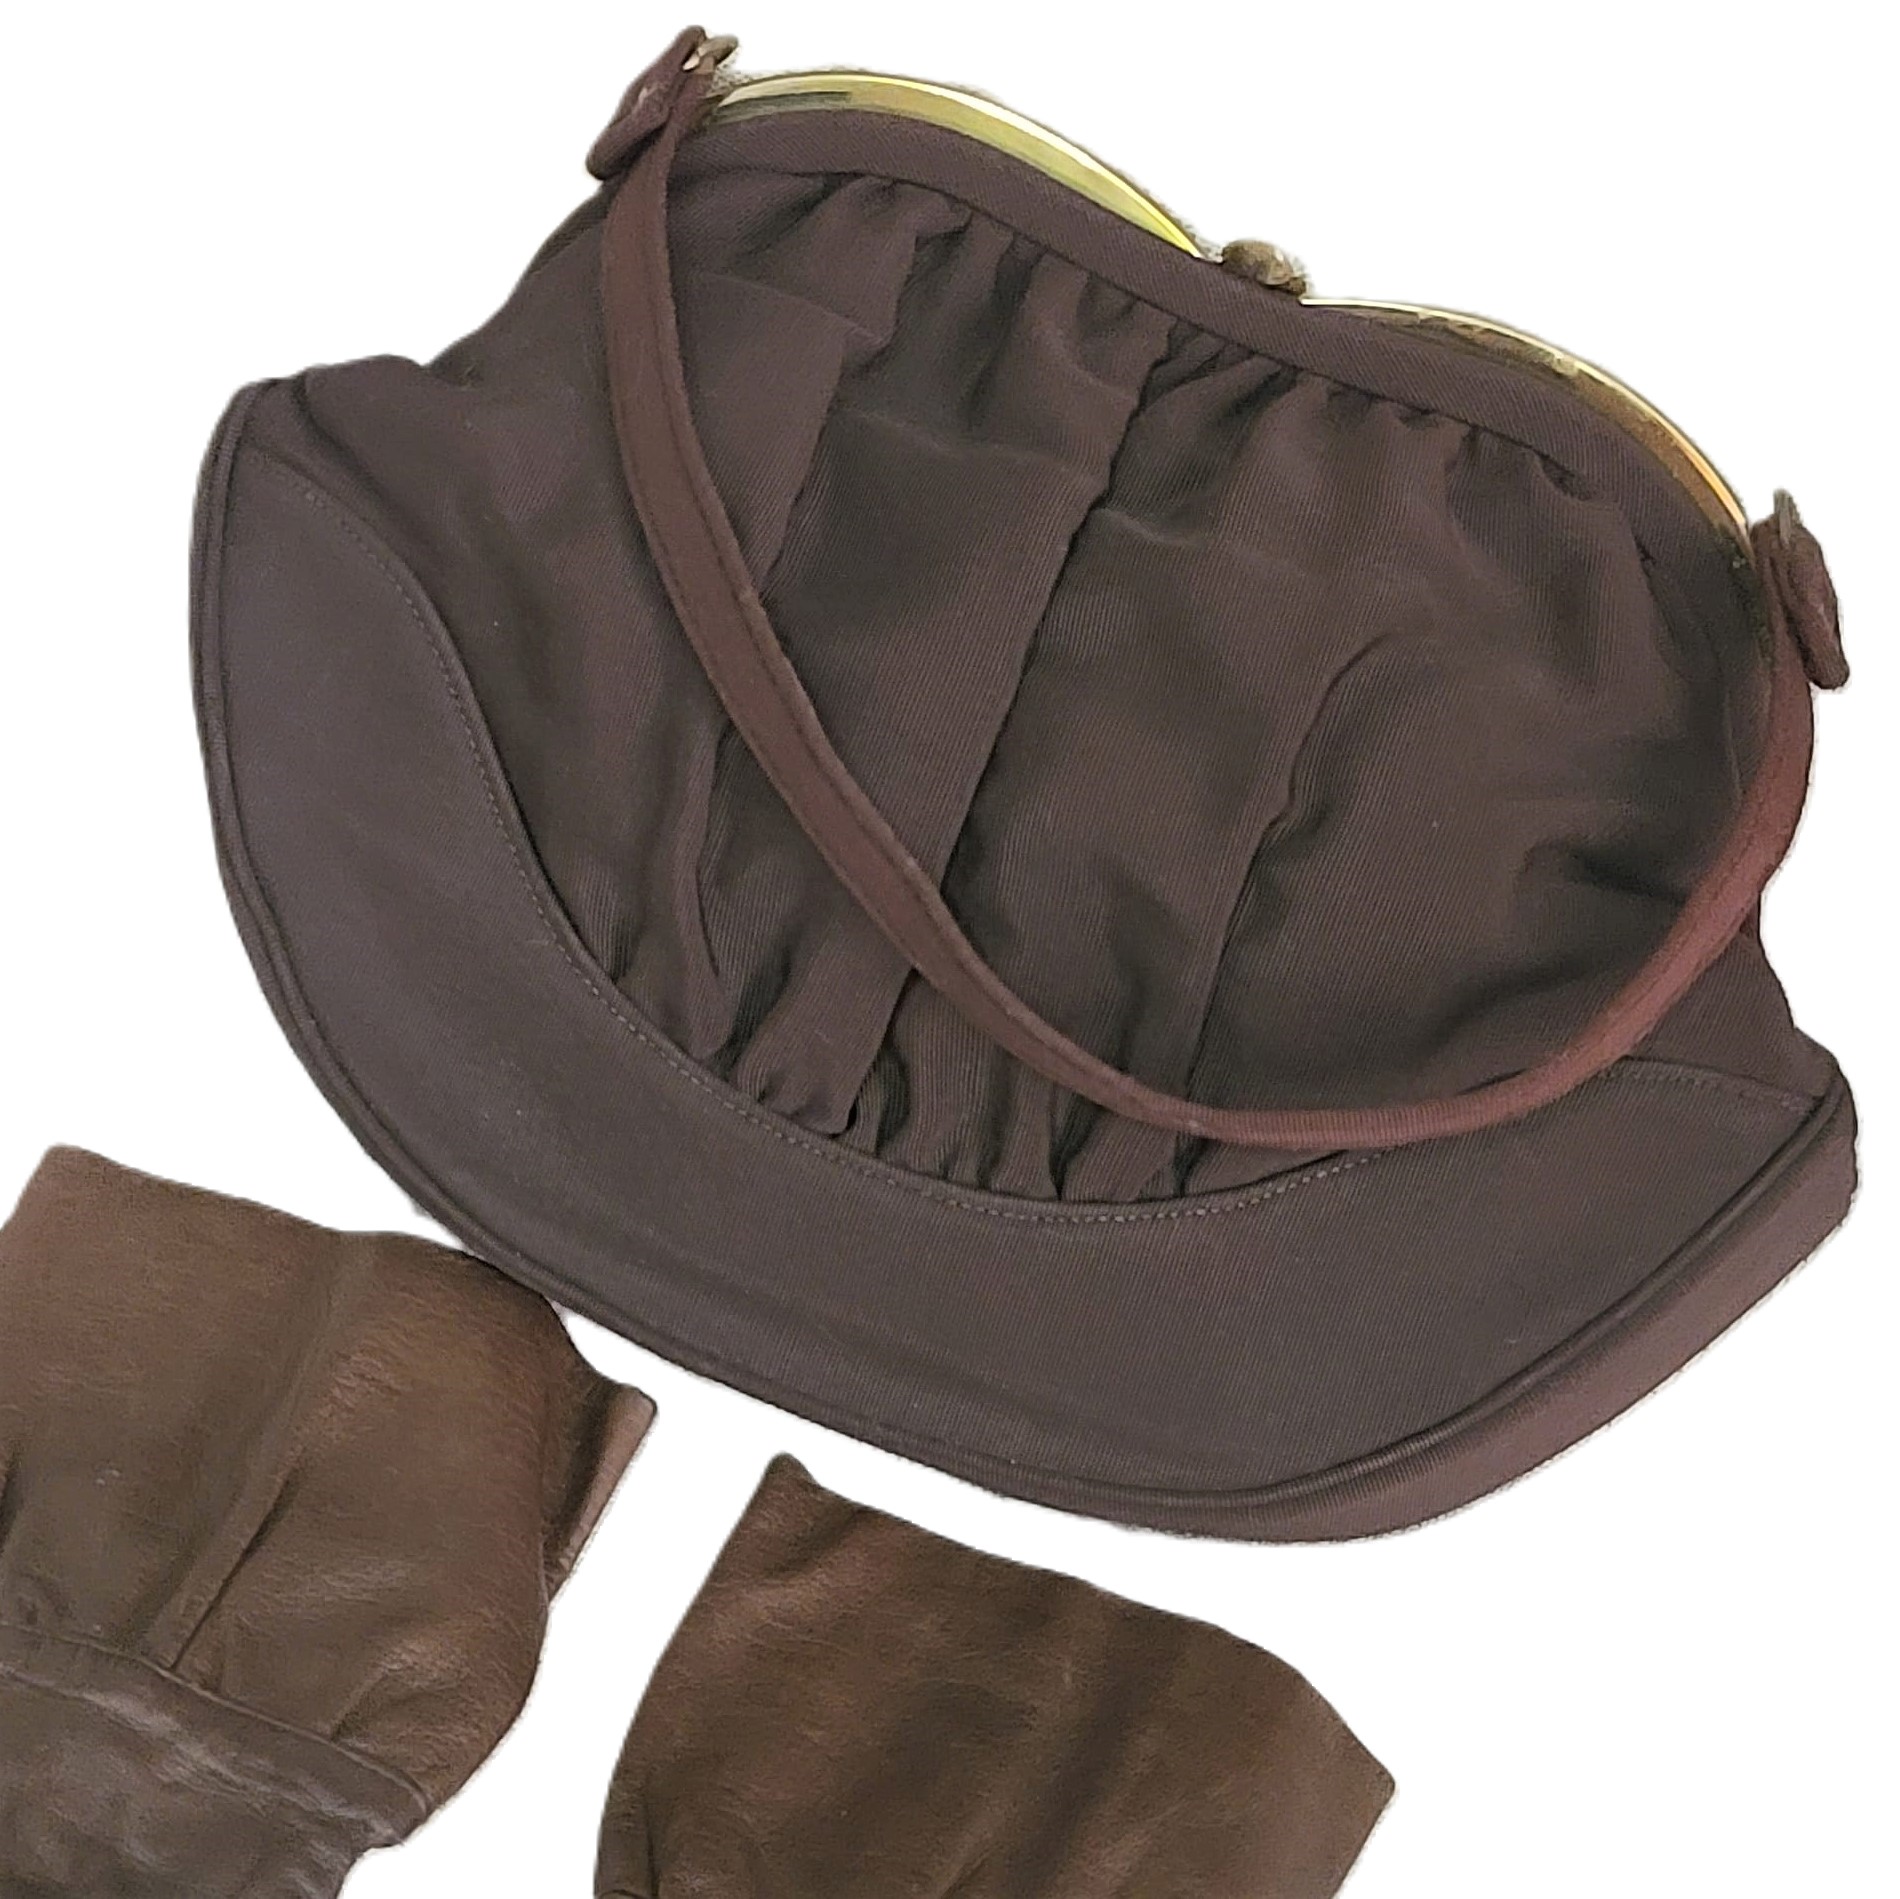 L & M Spotlite brown vintage handbag & brown leather opera glove